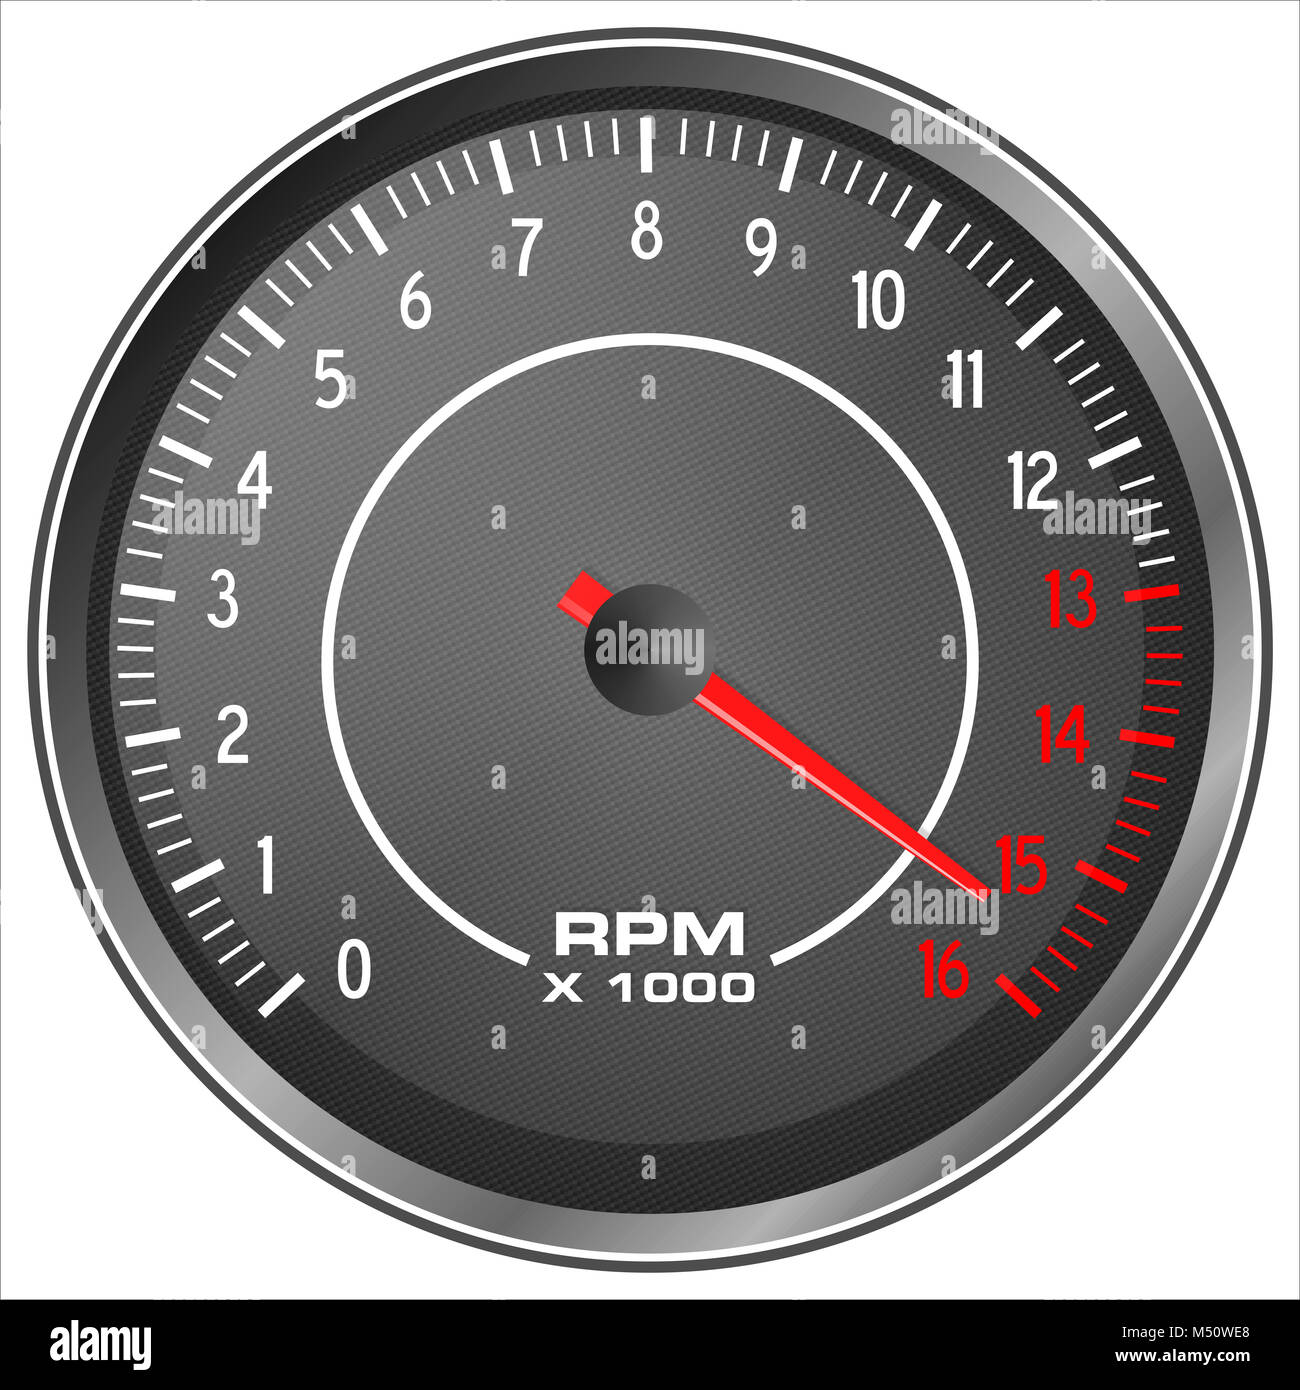 https://c8.alamy.com/comp/M50WE8/tachometer-illustration-isolated-on-white-background-M50WE8.jpg